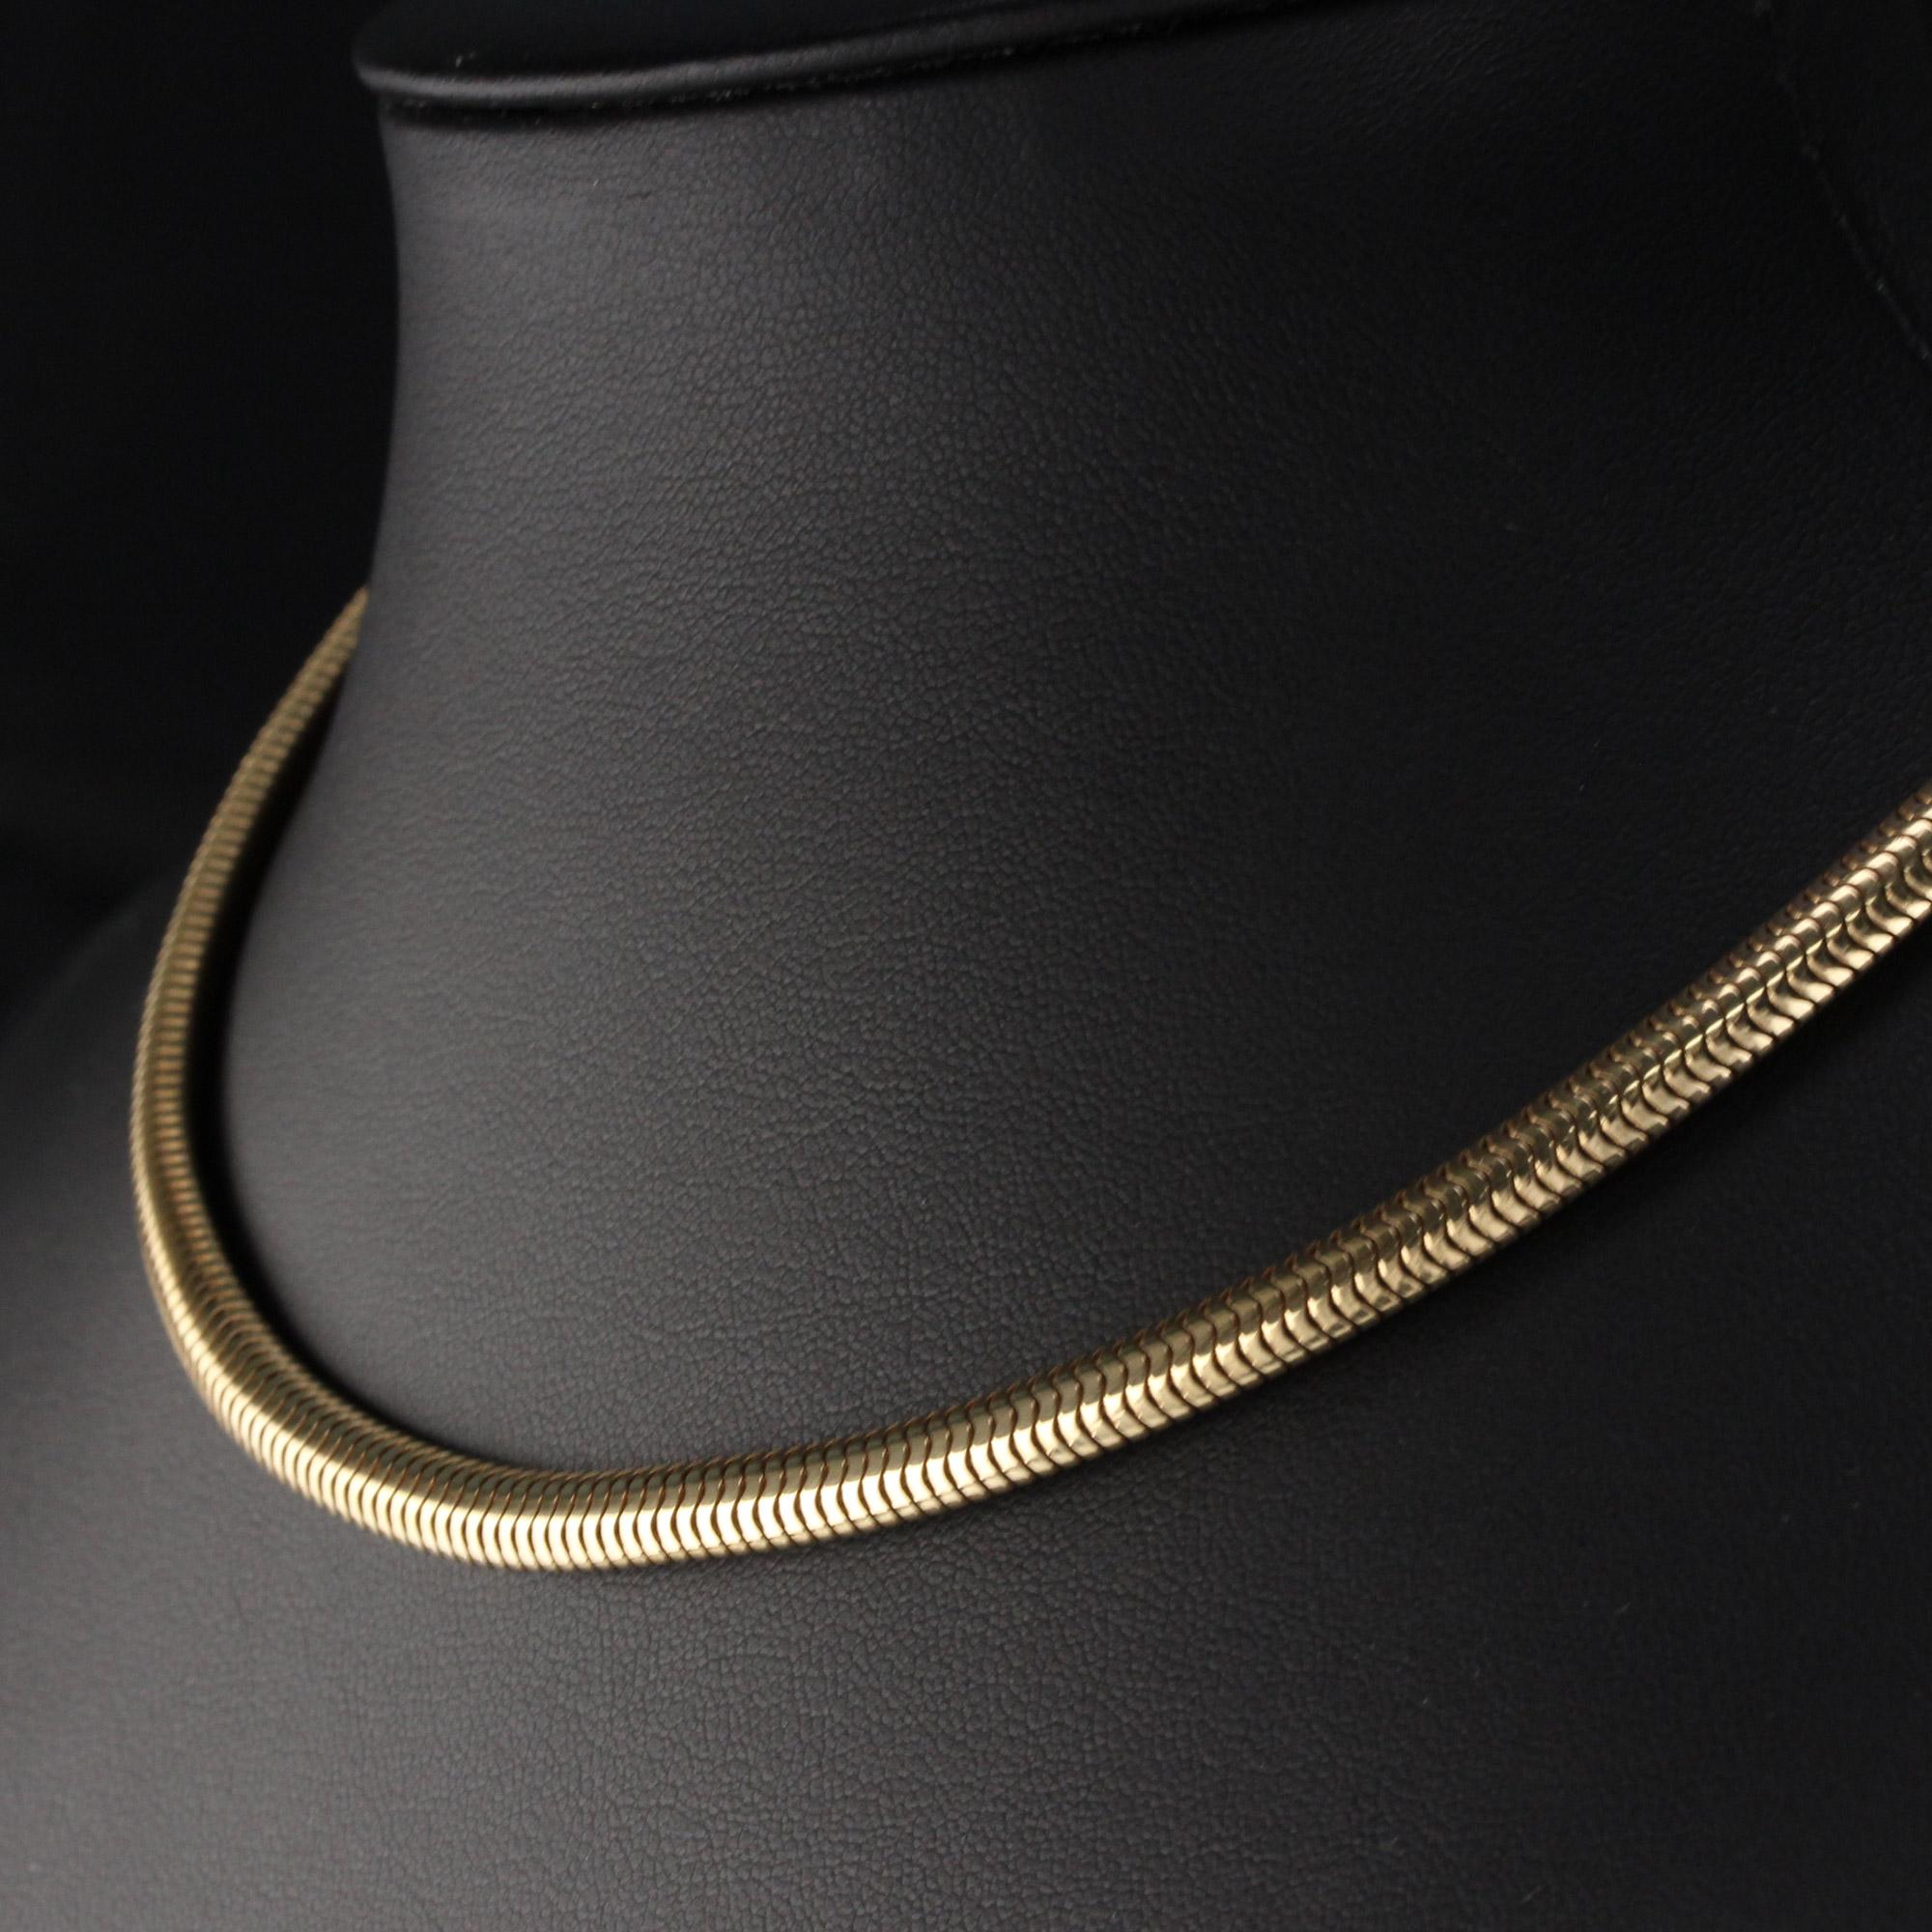 14 karat gold snake chain